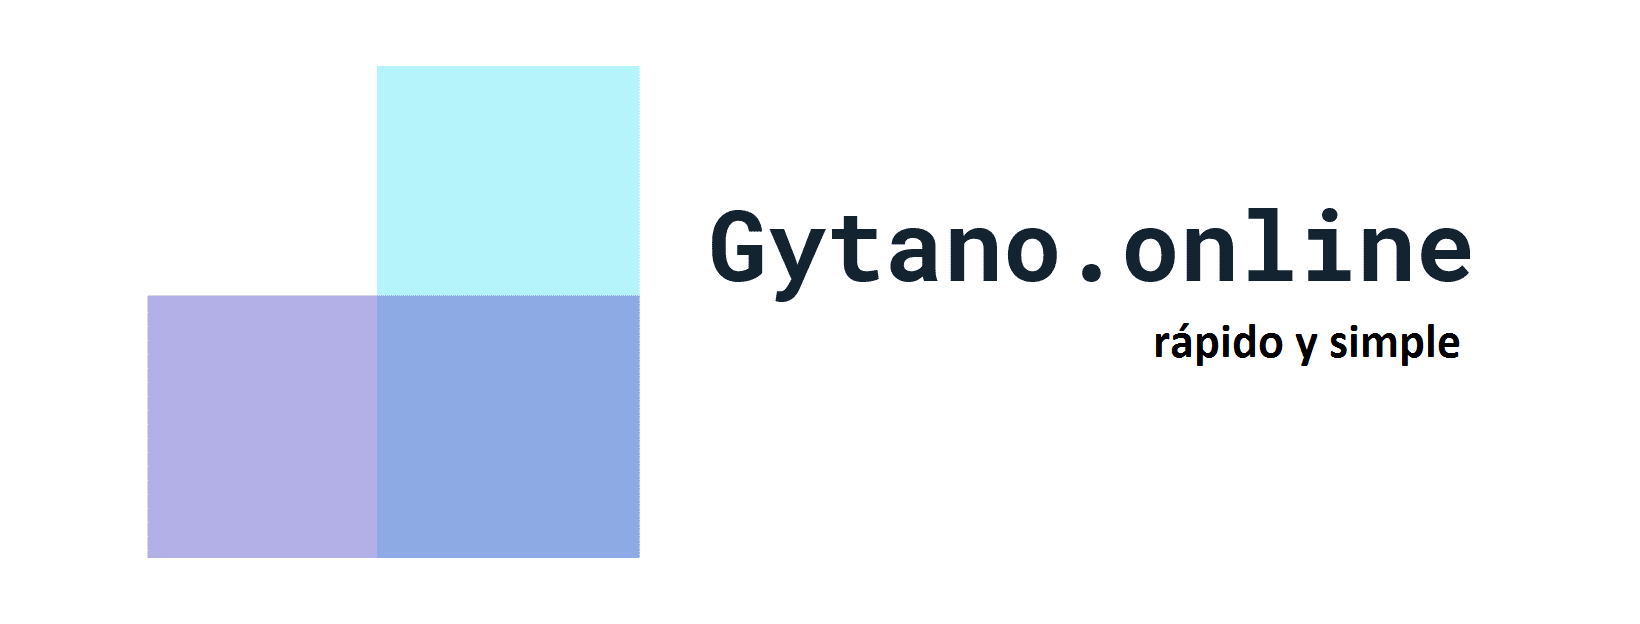 Gytano.online